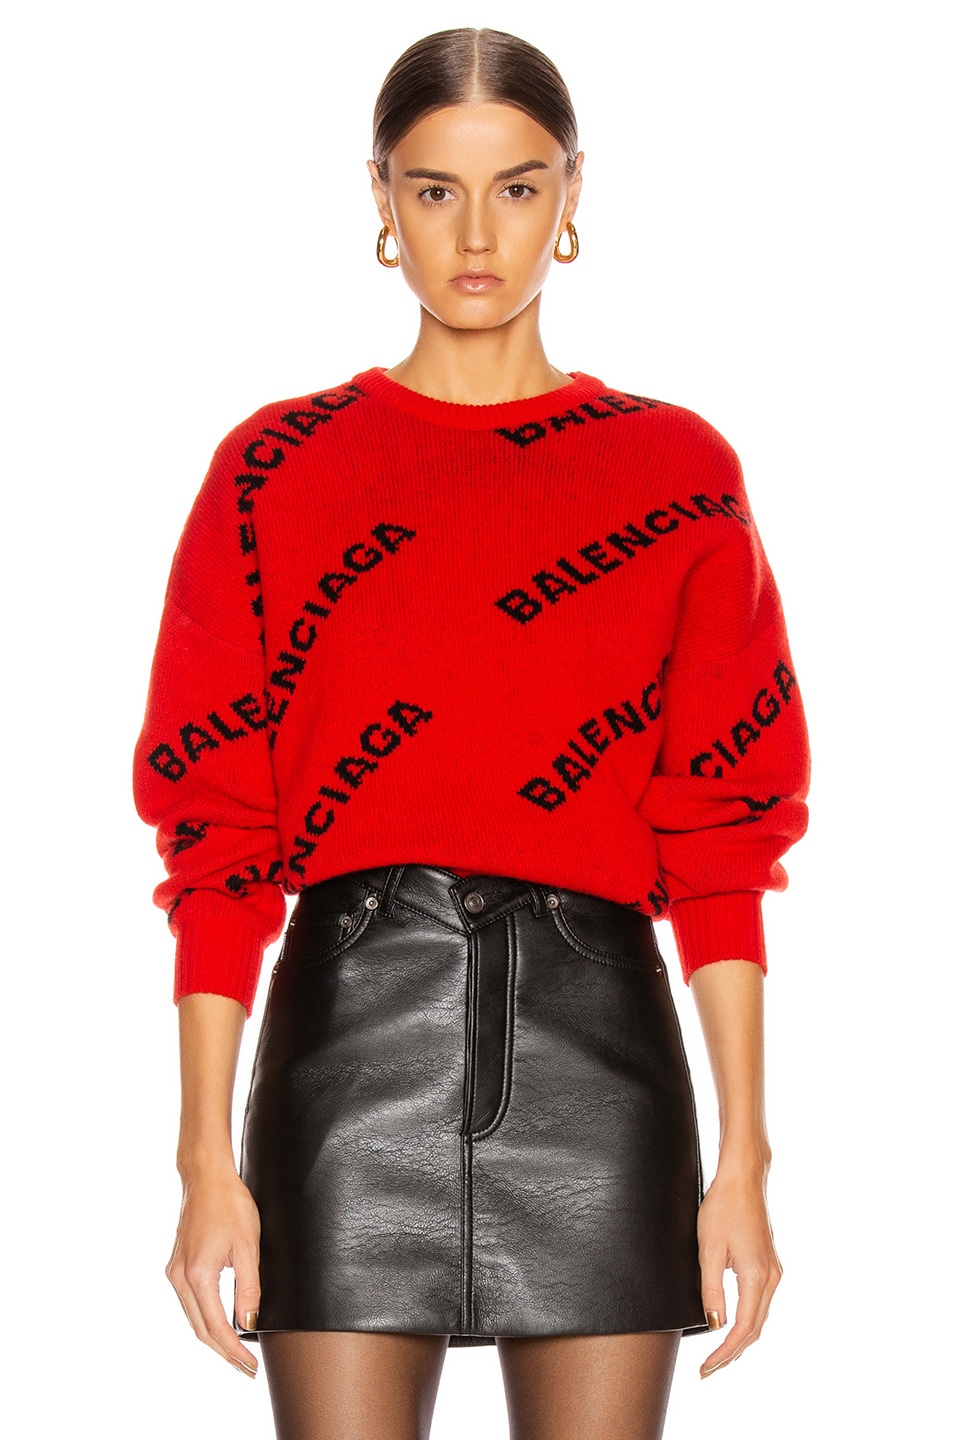 Balenciaga Long Sleeve Logo Crew Neck Sweater in Red & Black | FWRD